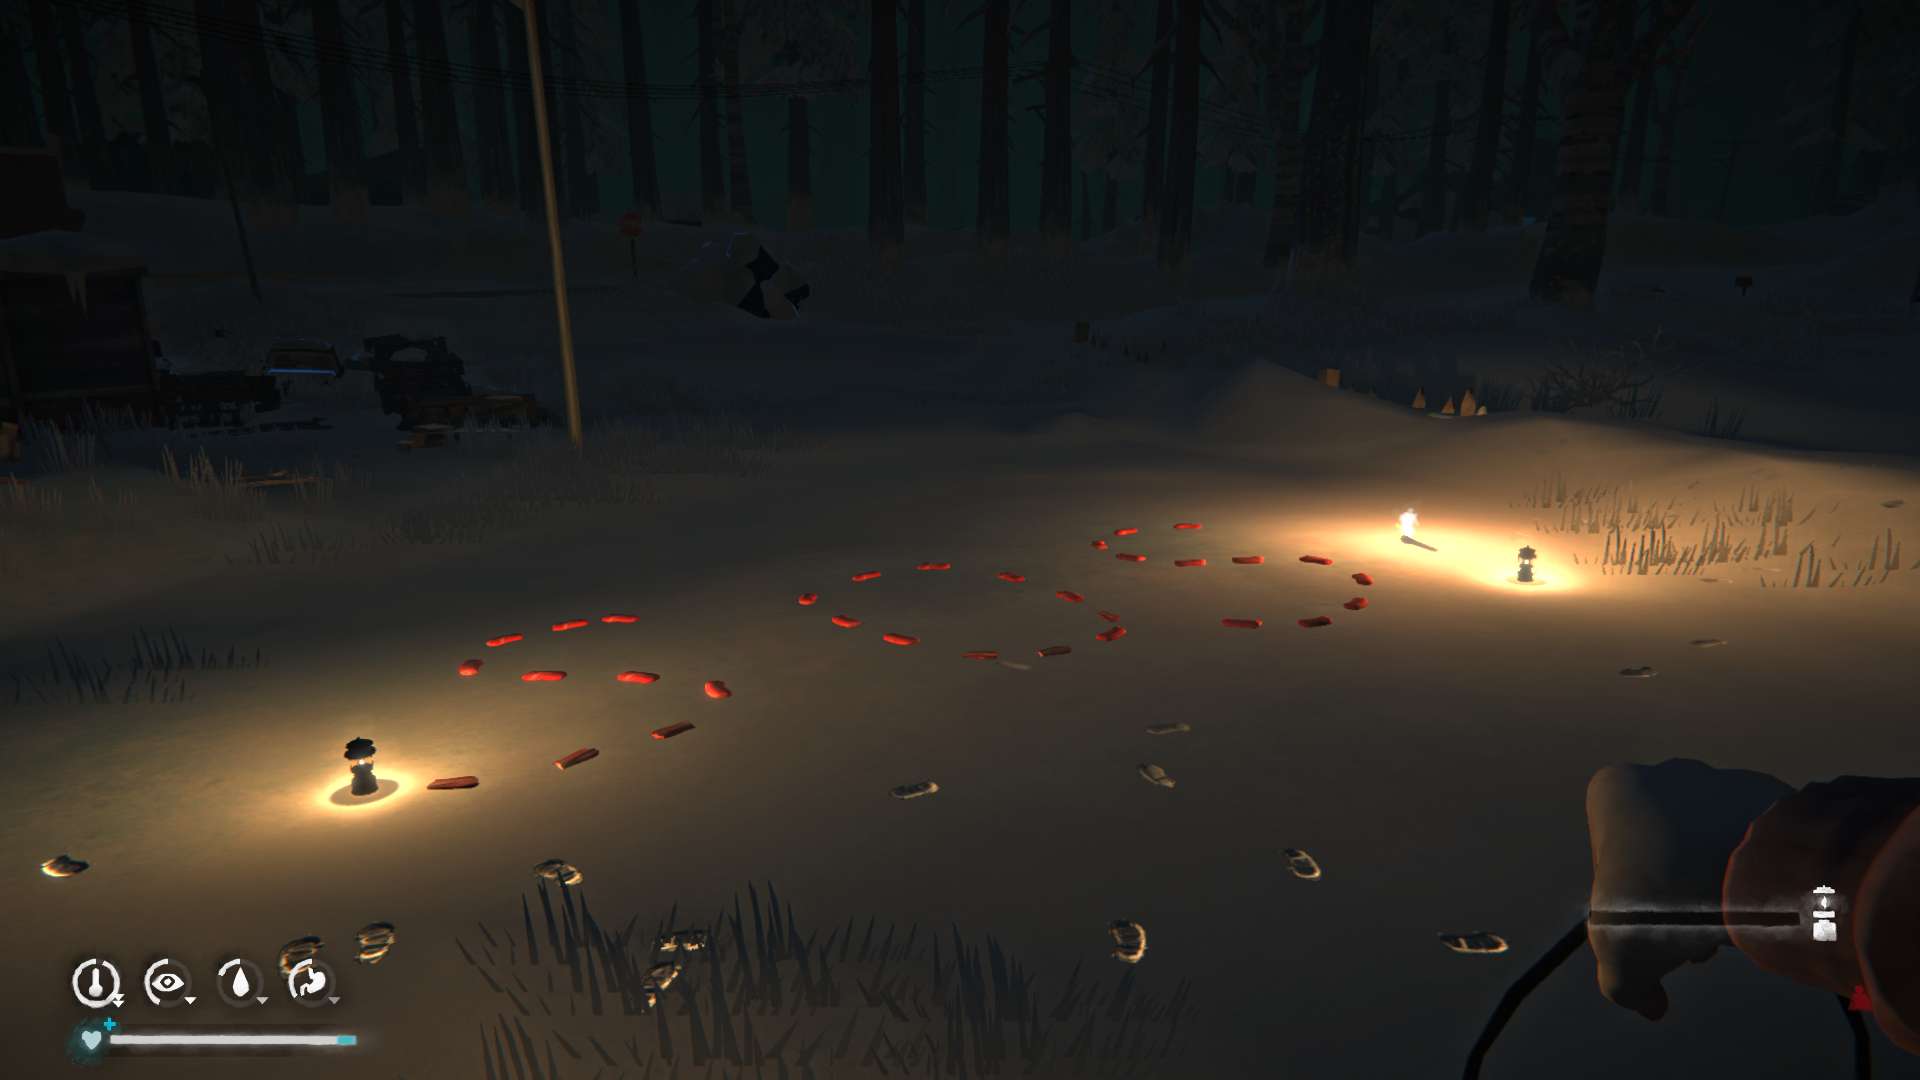 Скриншот игры The Long Dark, знак SOS на снегу